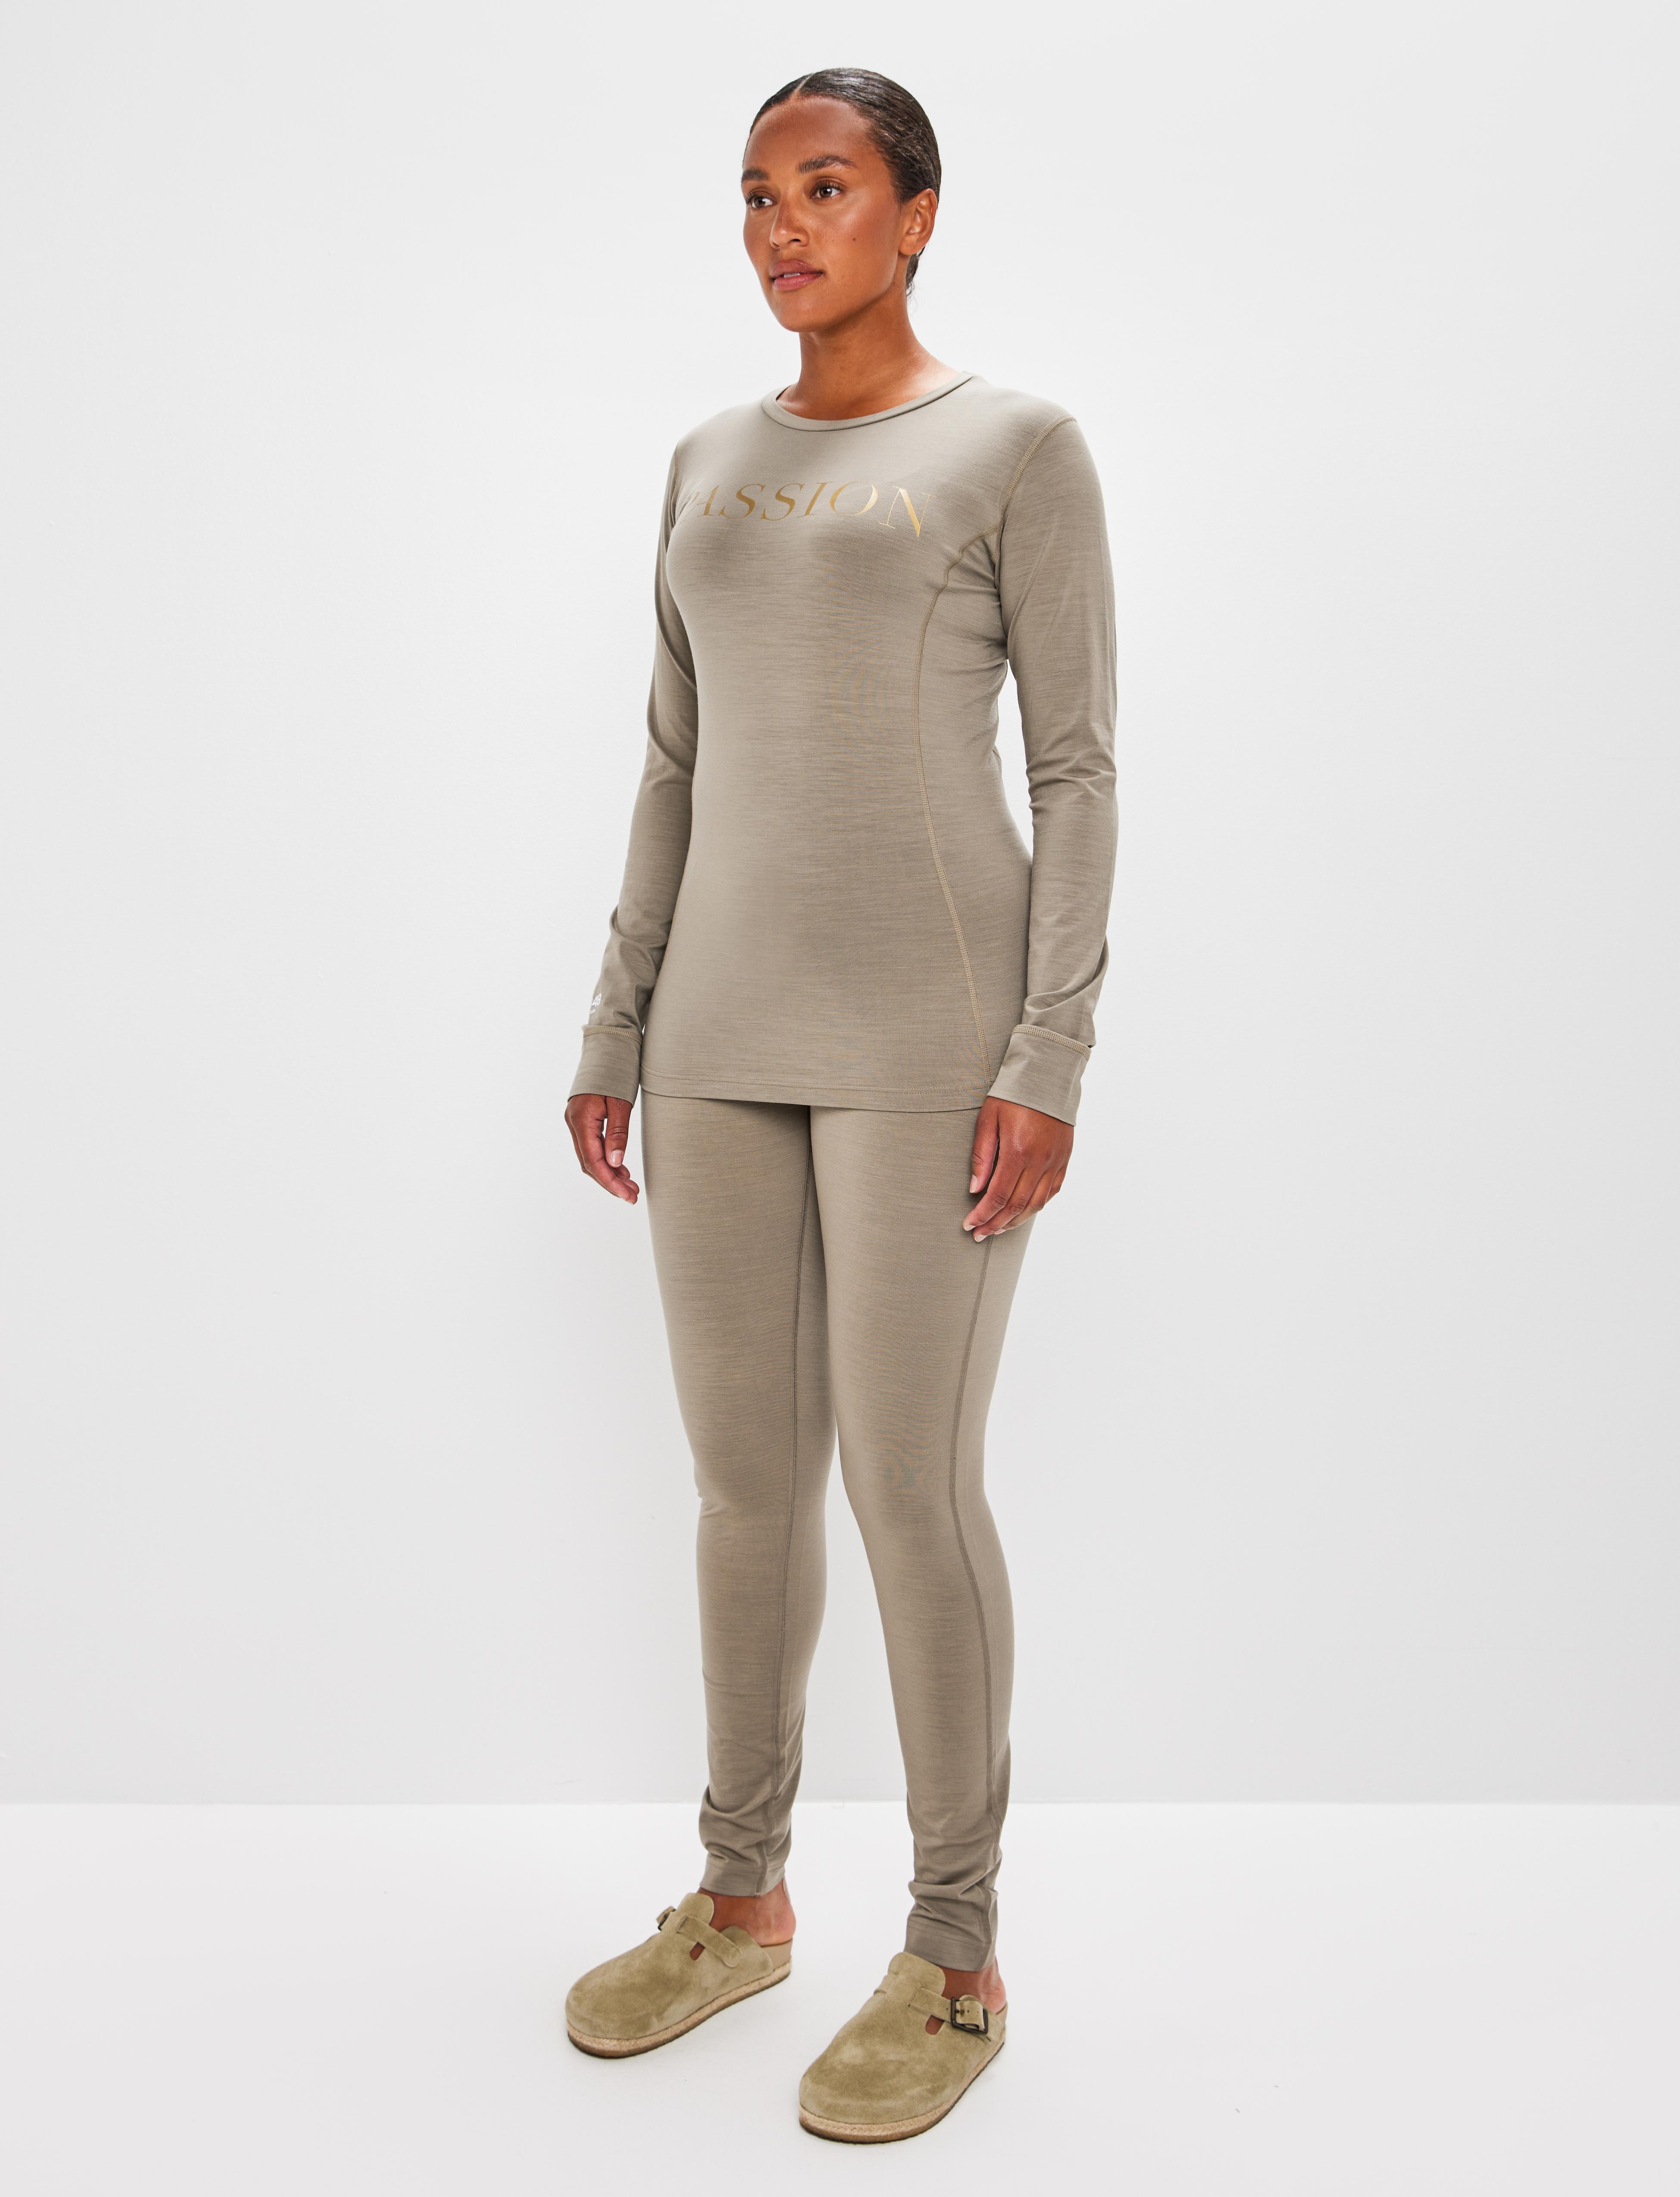 Altitude Shop women\'s wool 8848 online - merino underwear